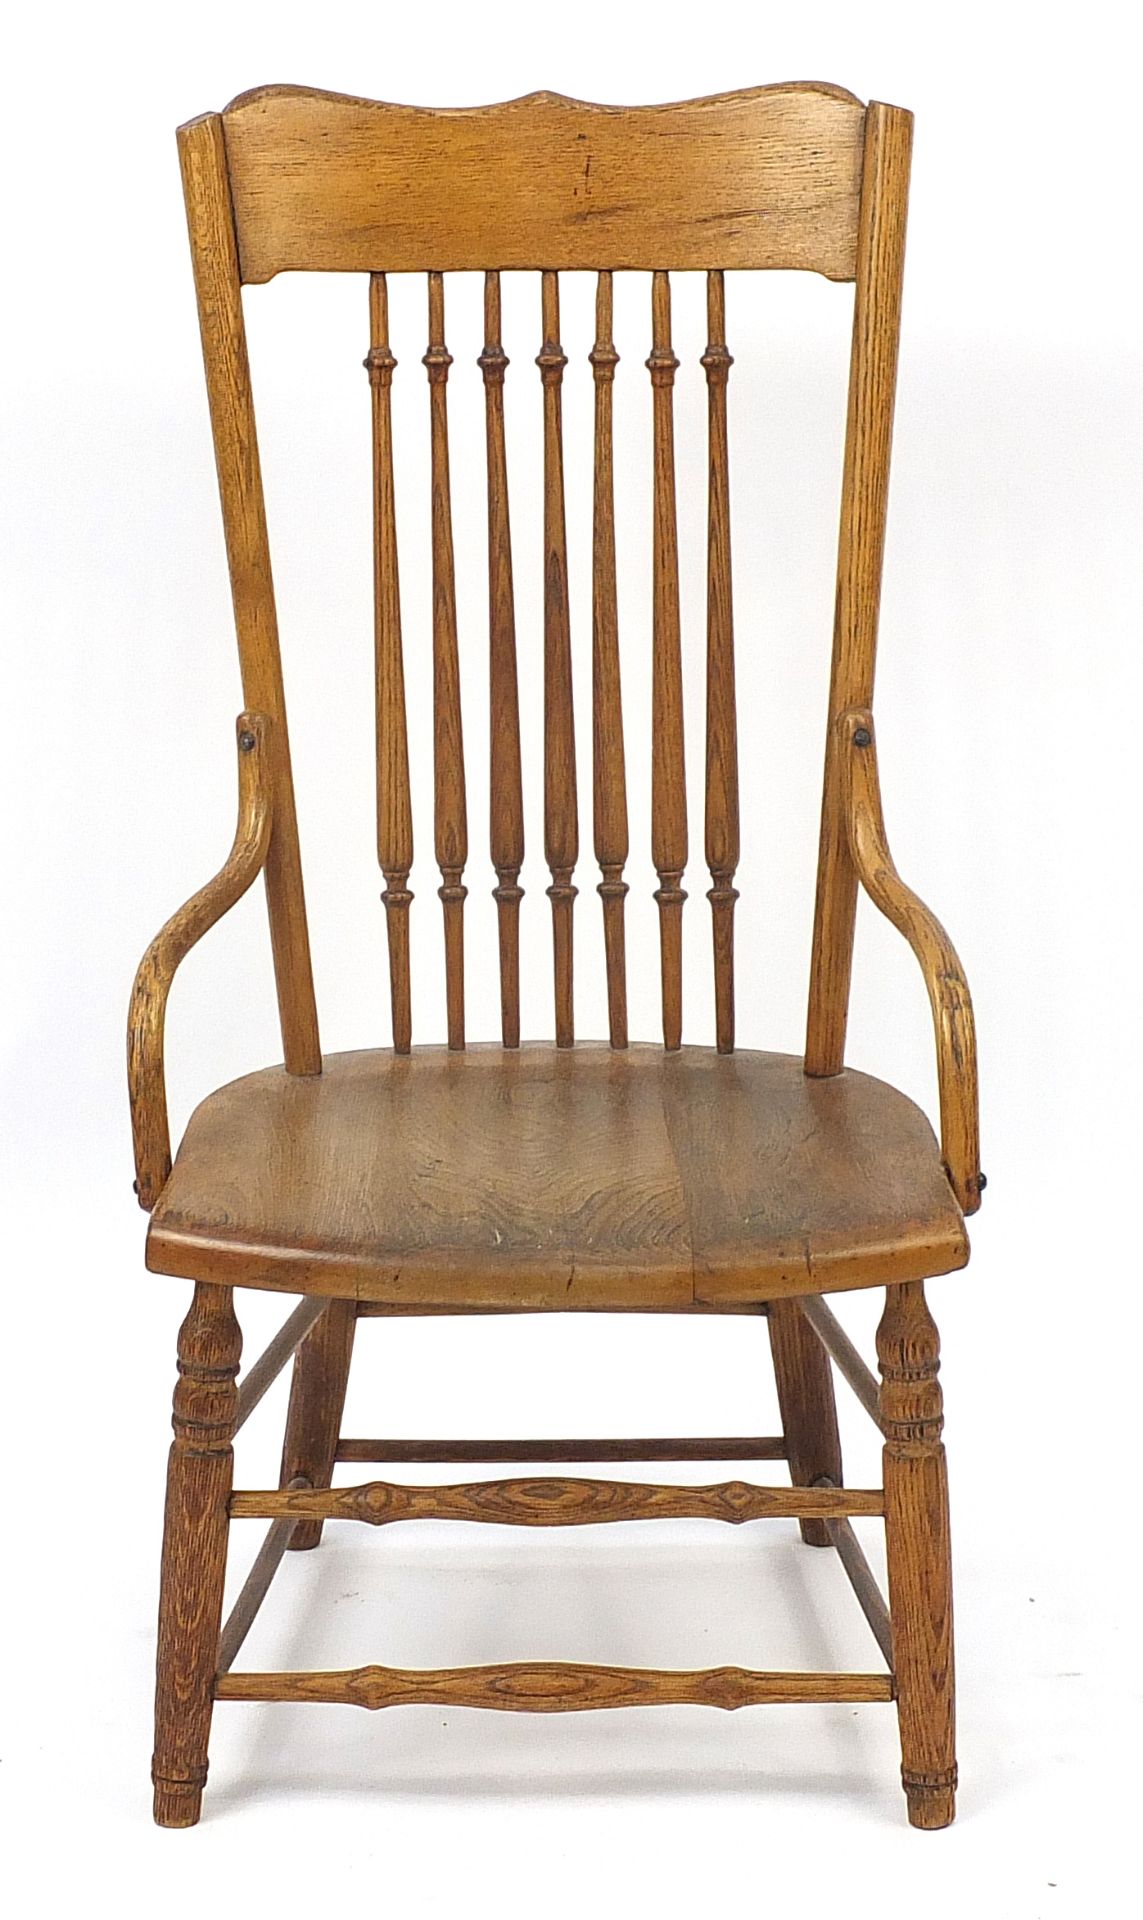 Antique elm stick back chair, 91cm high - Image 2 of 4